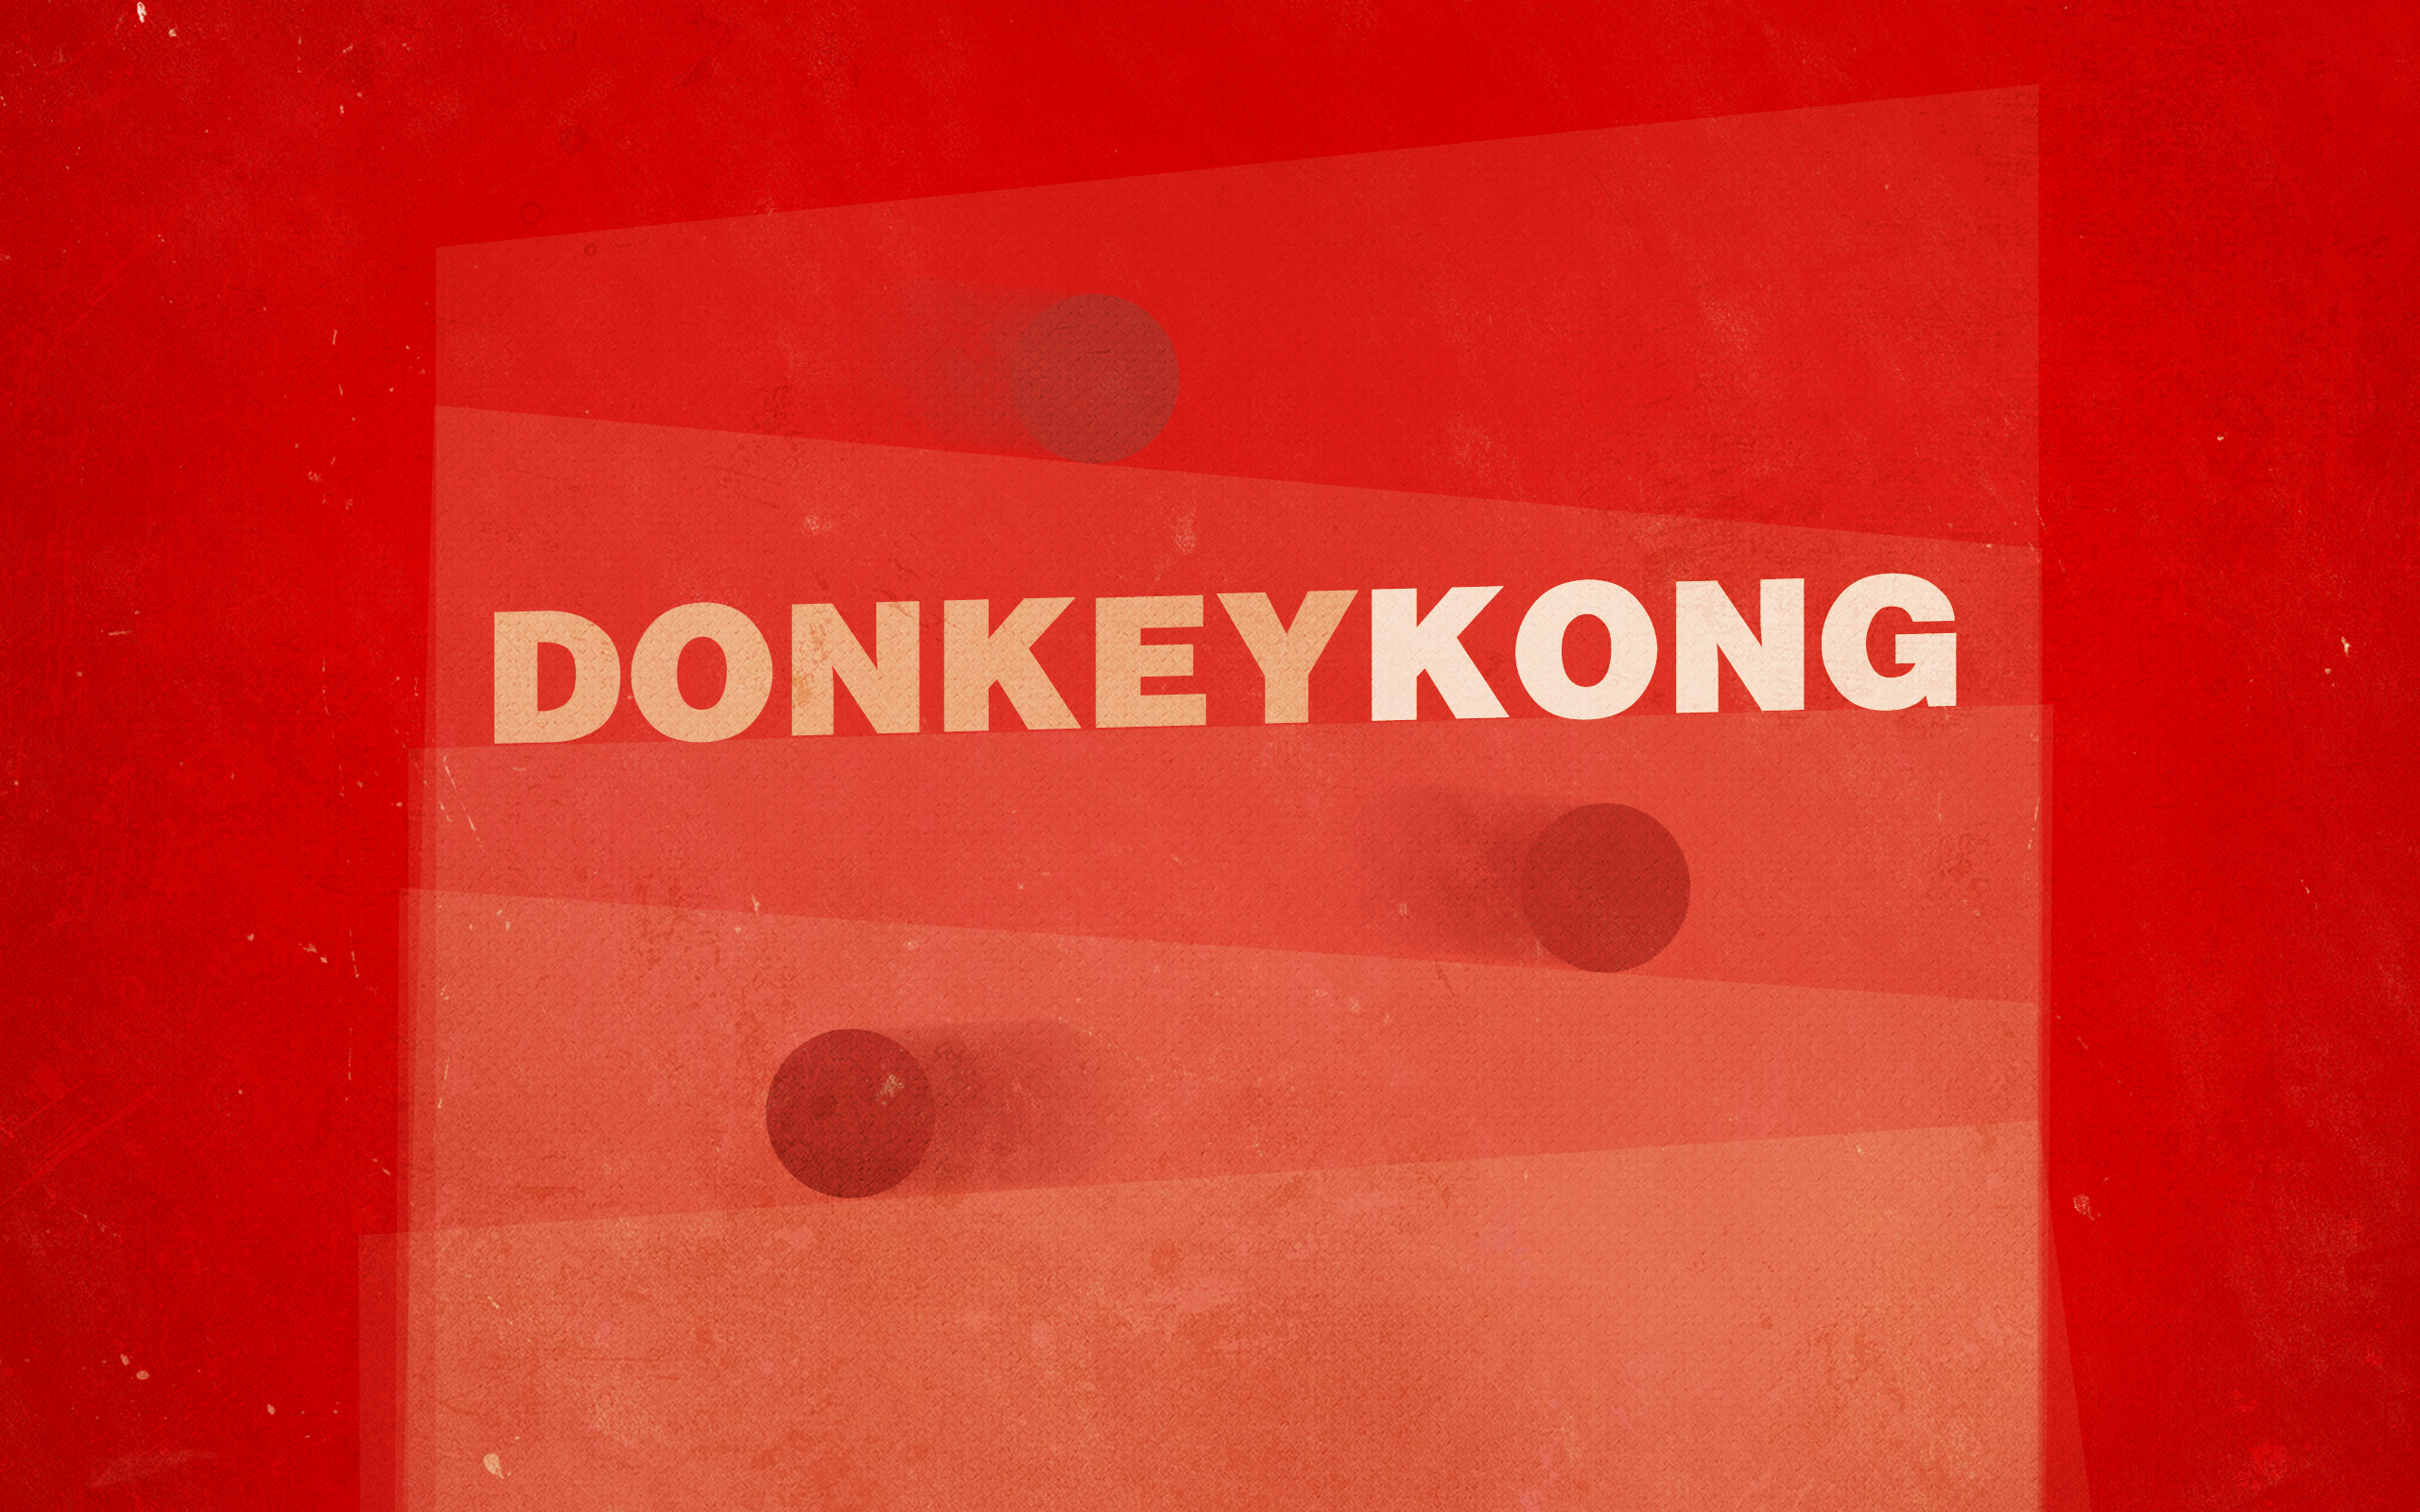 Video Game Donkey Kong 2560x1600